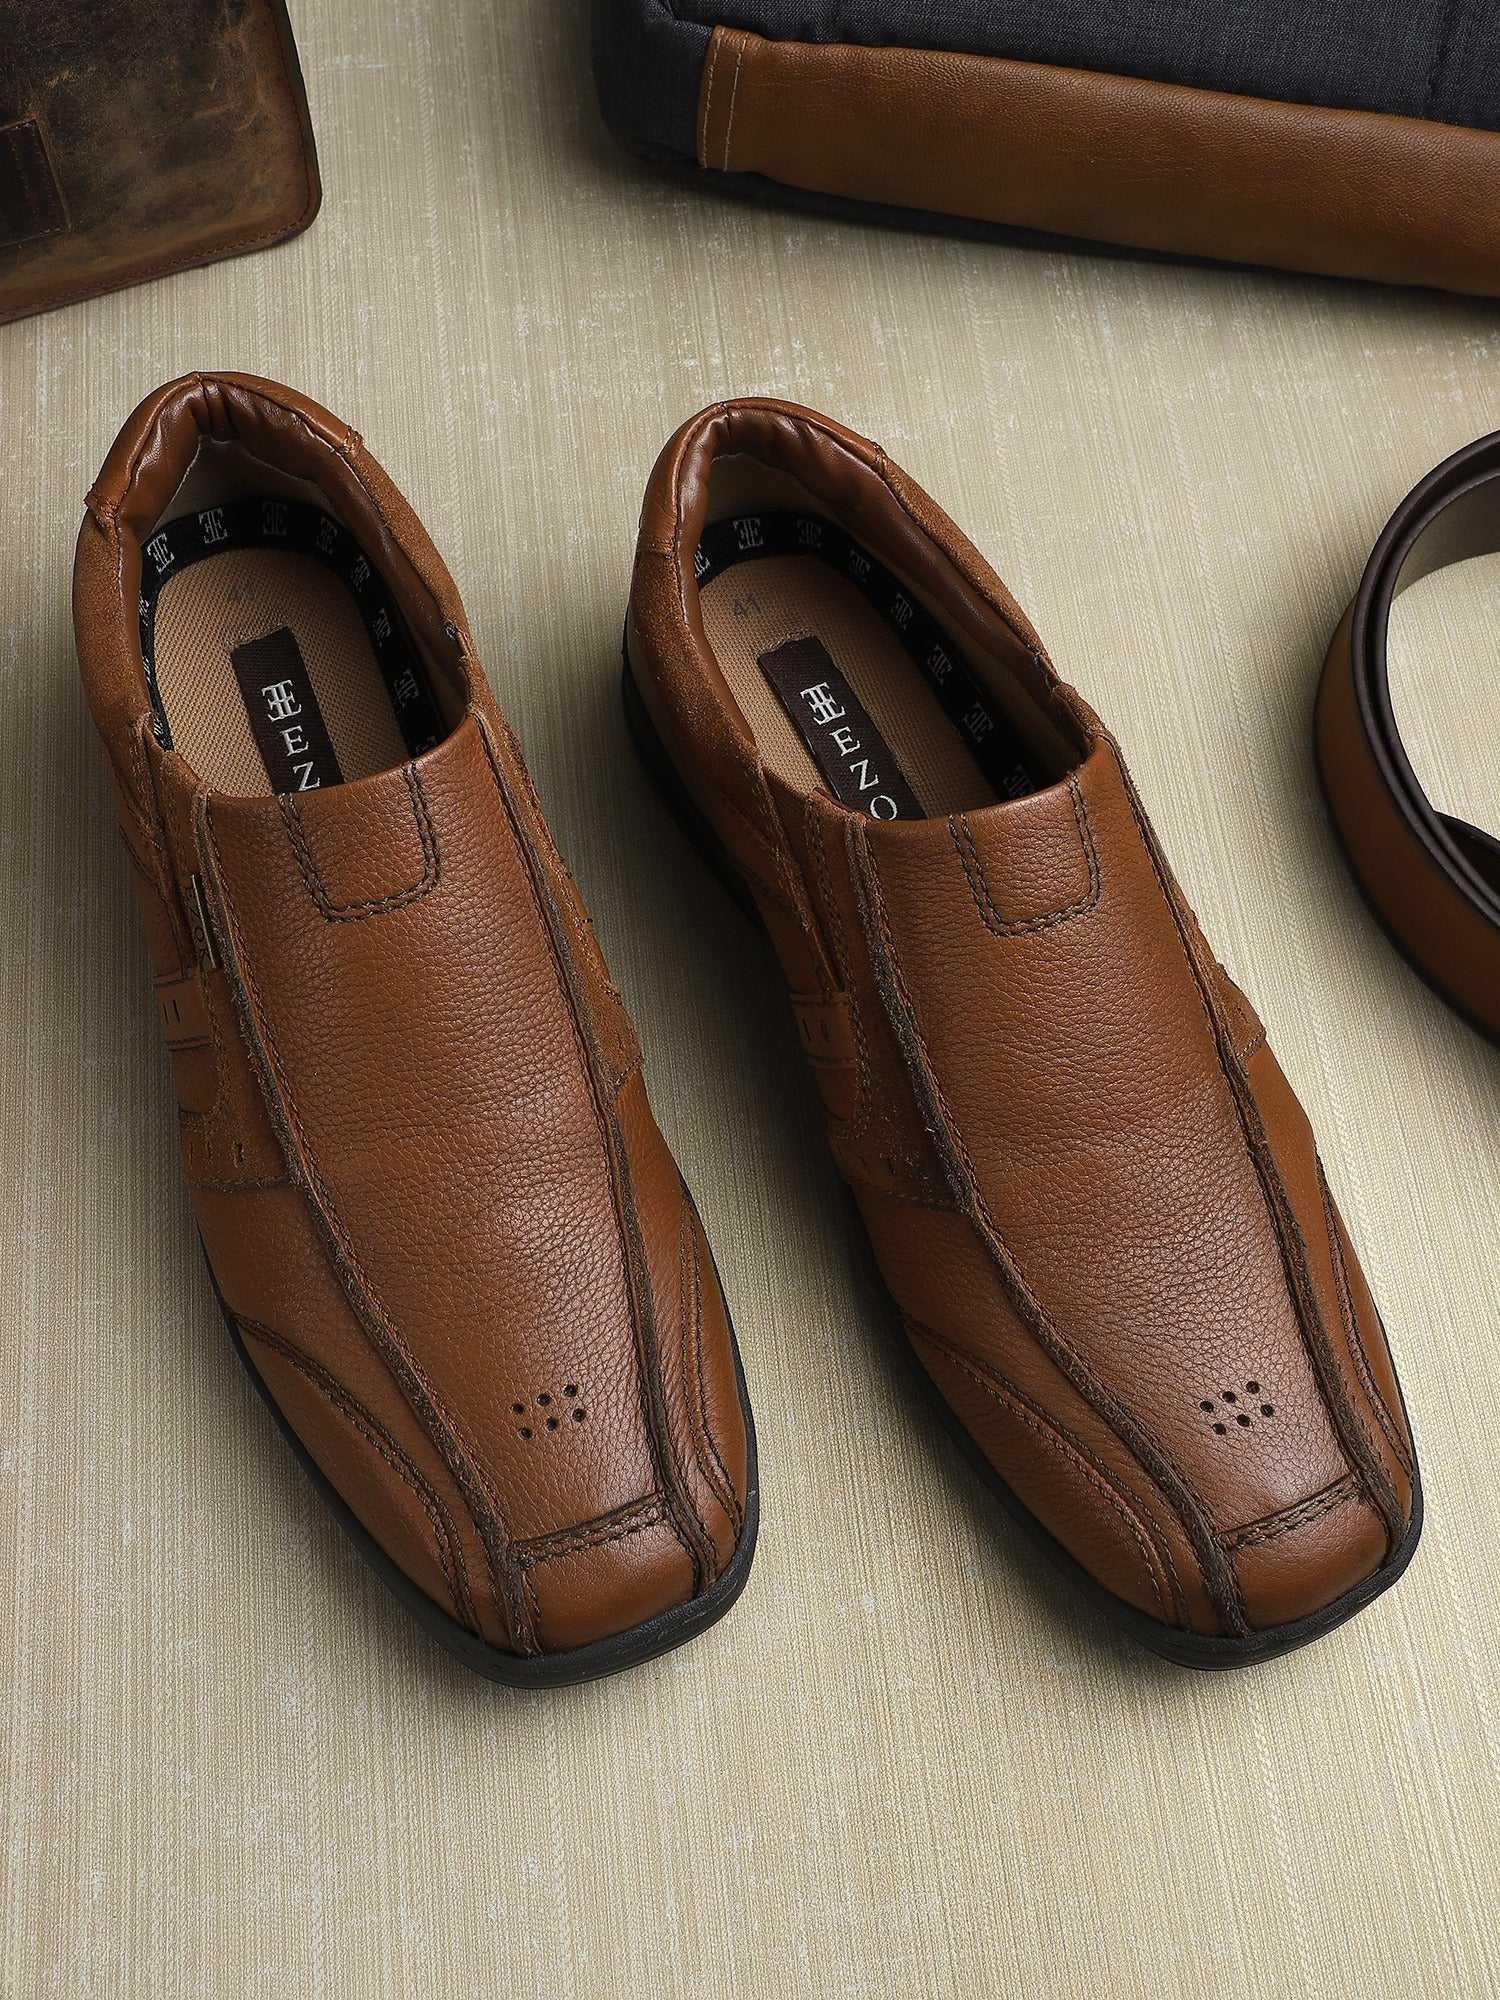 Ezok Men Genuine Leather Slip-Ons Shoes